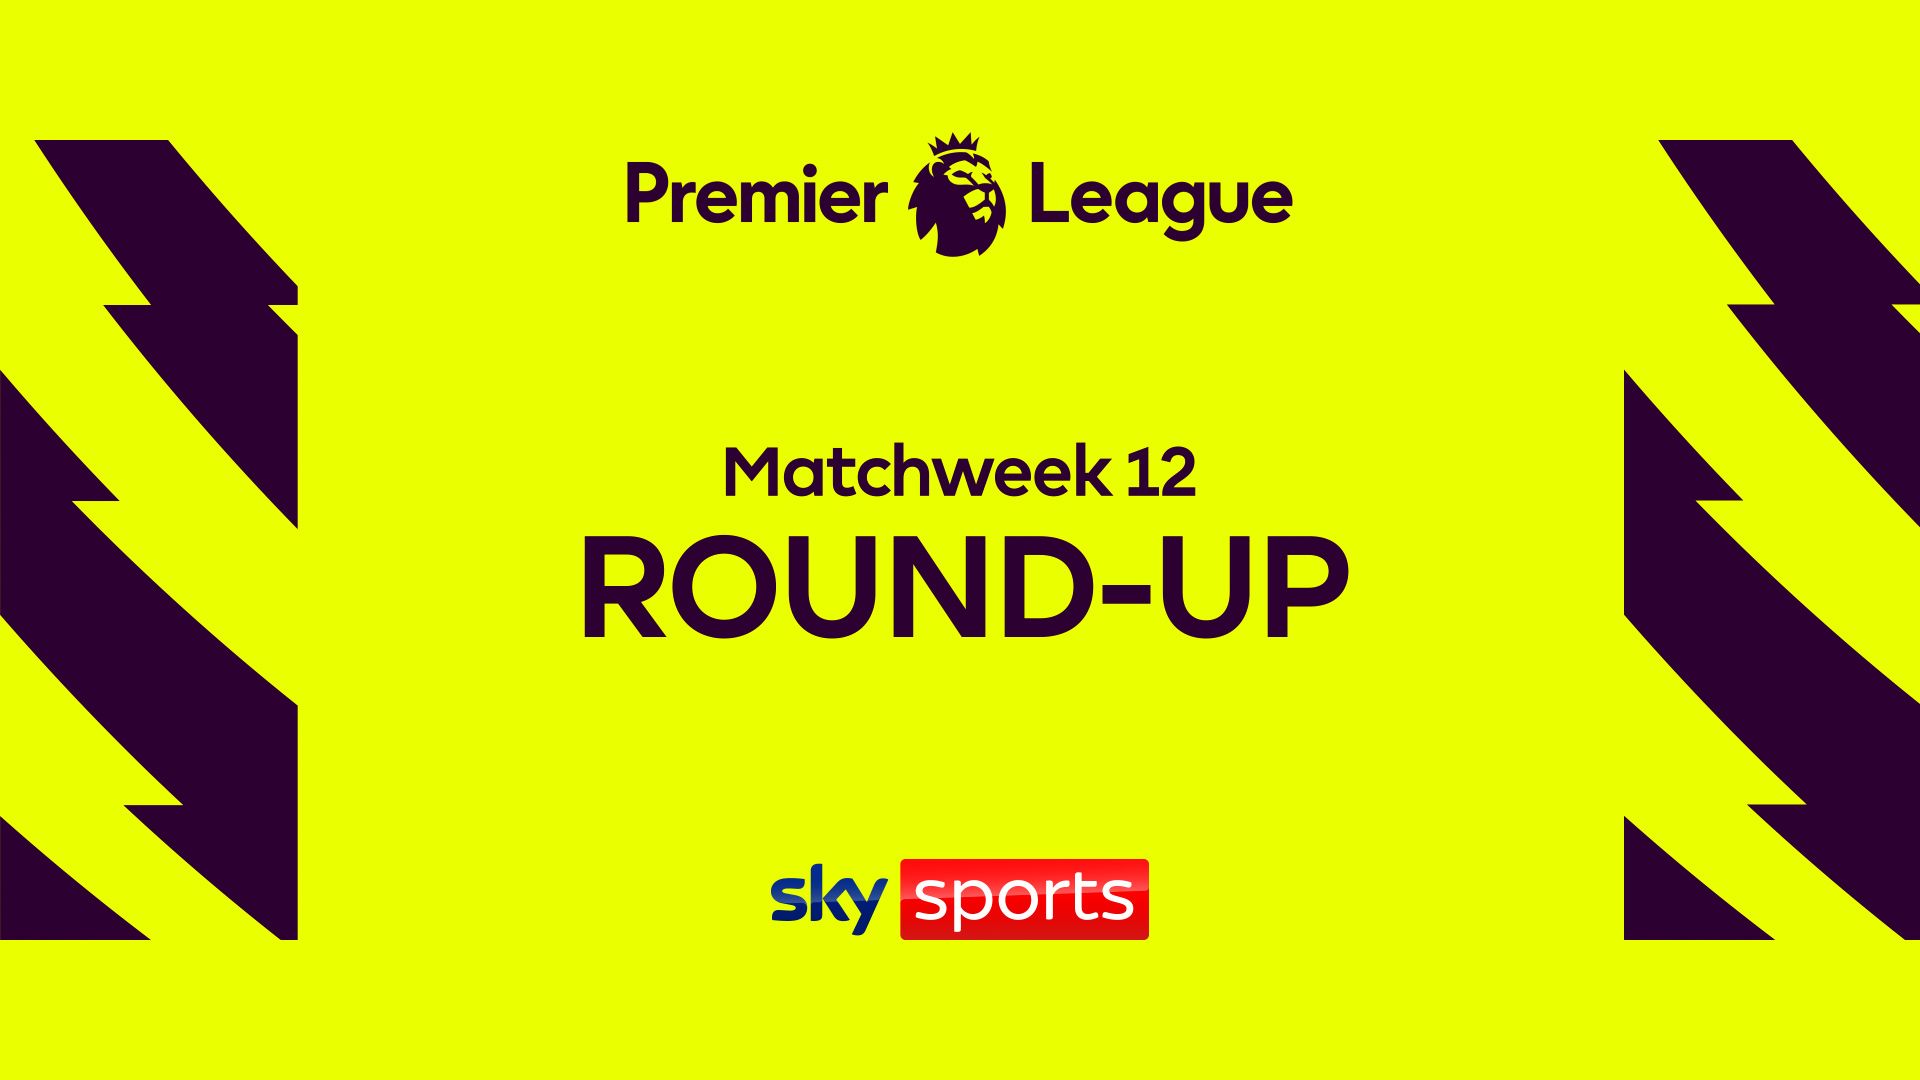 Premier League Weekend Round-up: MW12